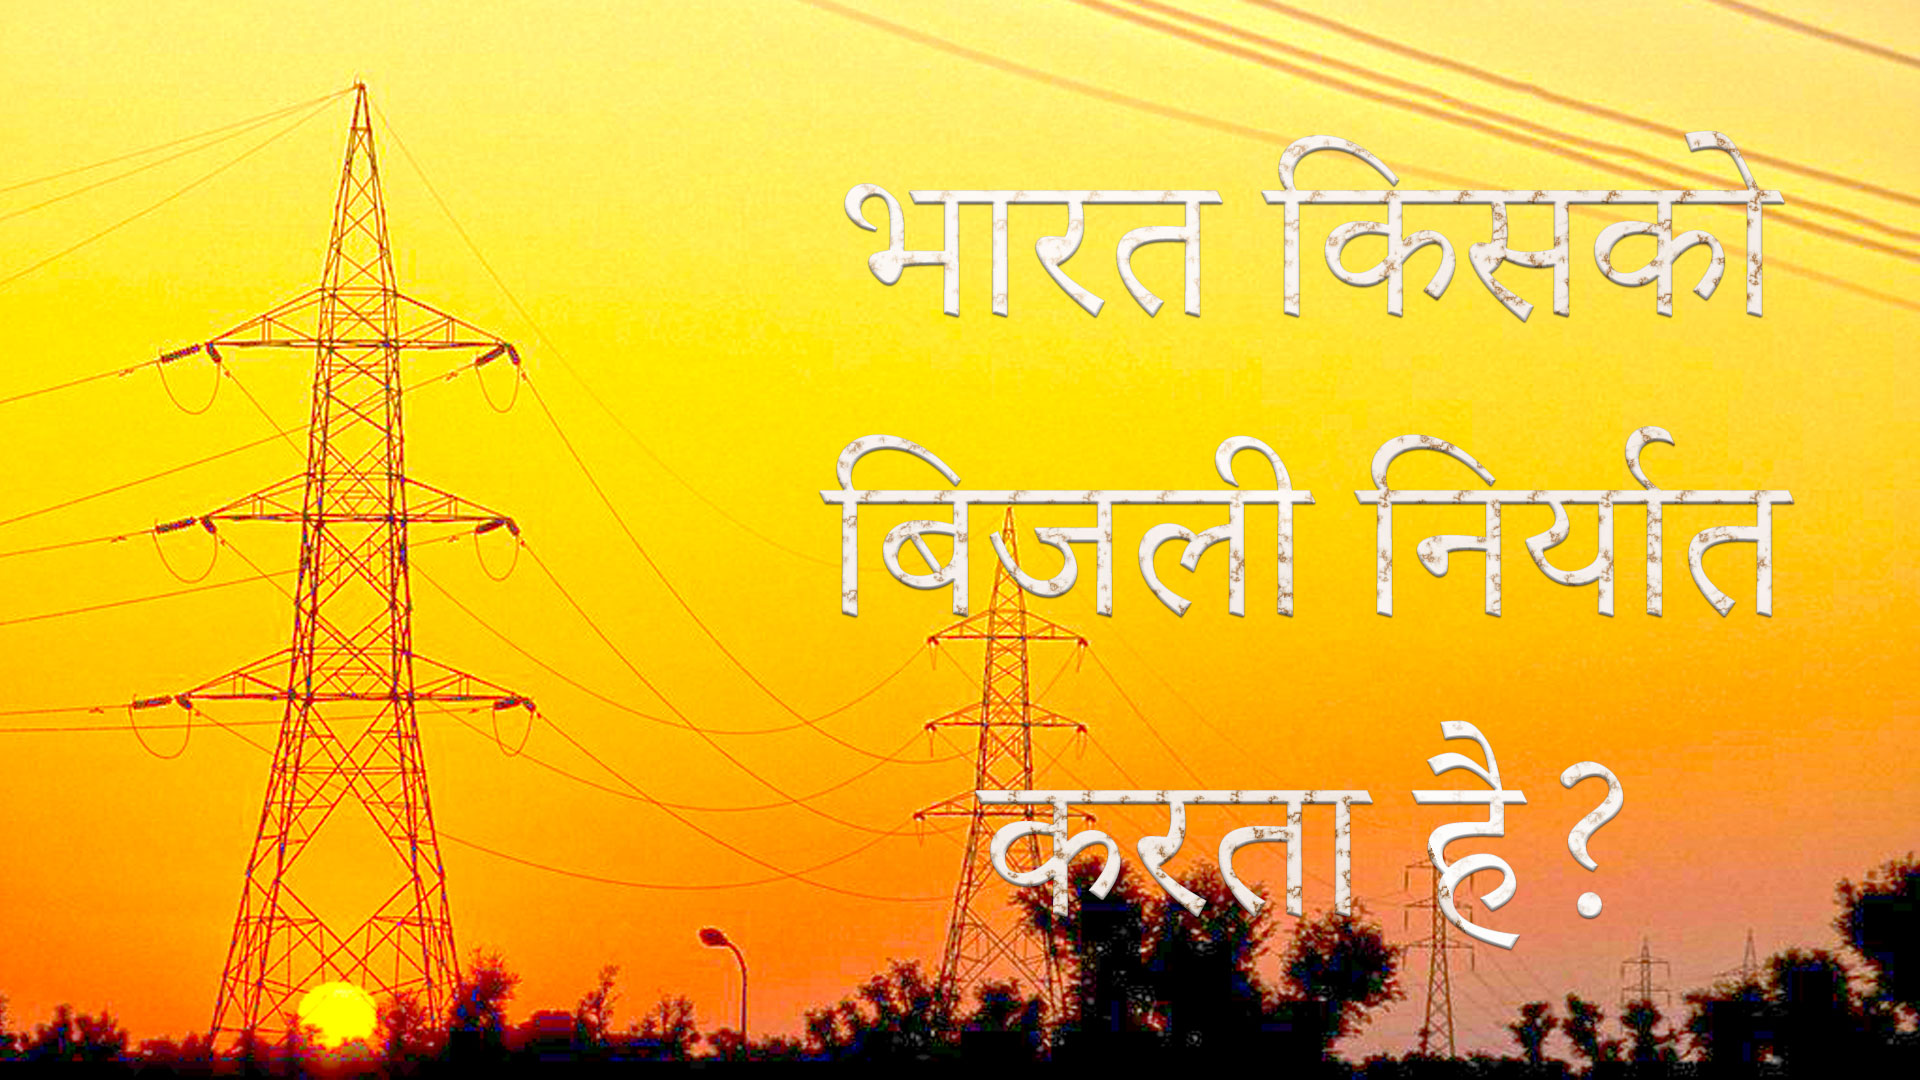 भारत किसको बिजली निर्यात करता है? - India Export Electricity